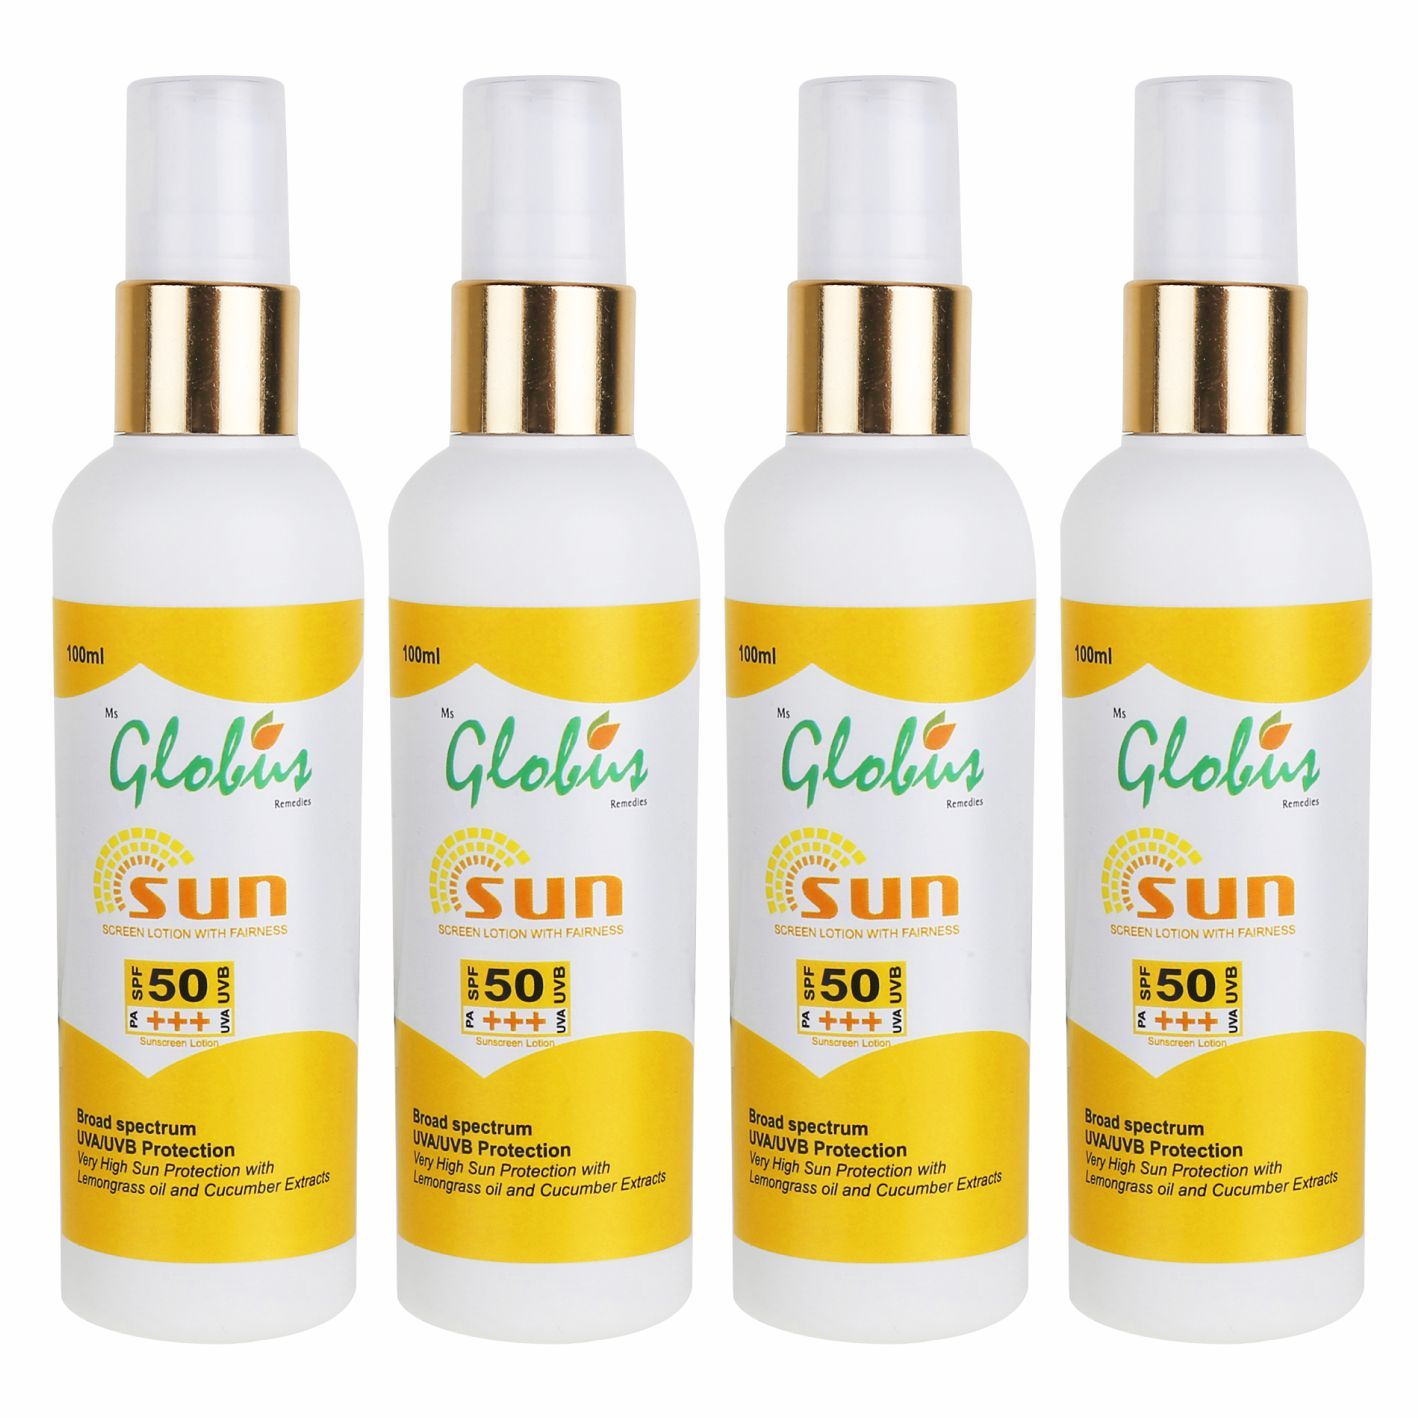 Buy Globus Ayurvedic Sunscreen Lotion Spf 50 Pa+++ 100 ml (Pack of 4) - Purplle